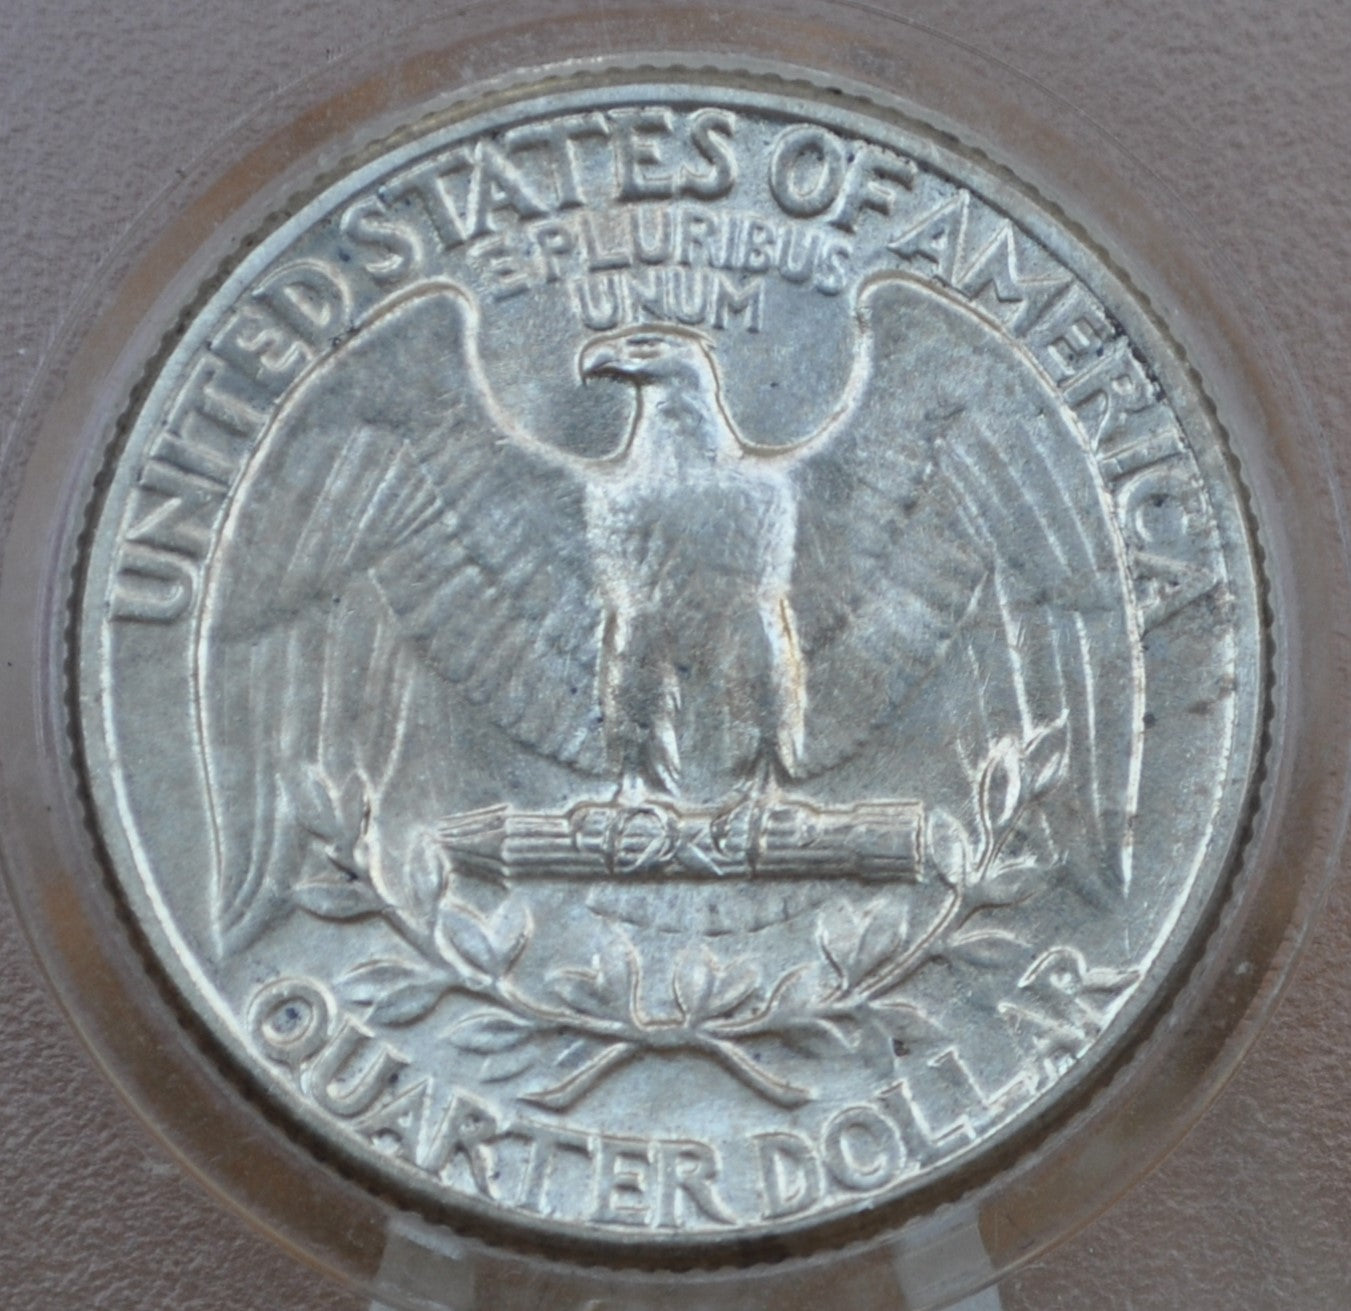 1937 Washington Silver Quarter - BU (Choice Uncirculated) - High Grade - 1937P Washington Quarter - Philadelphia Mint - 1937P Quarter